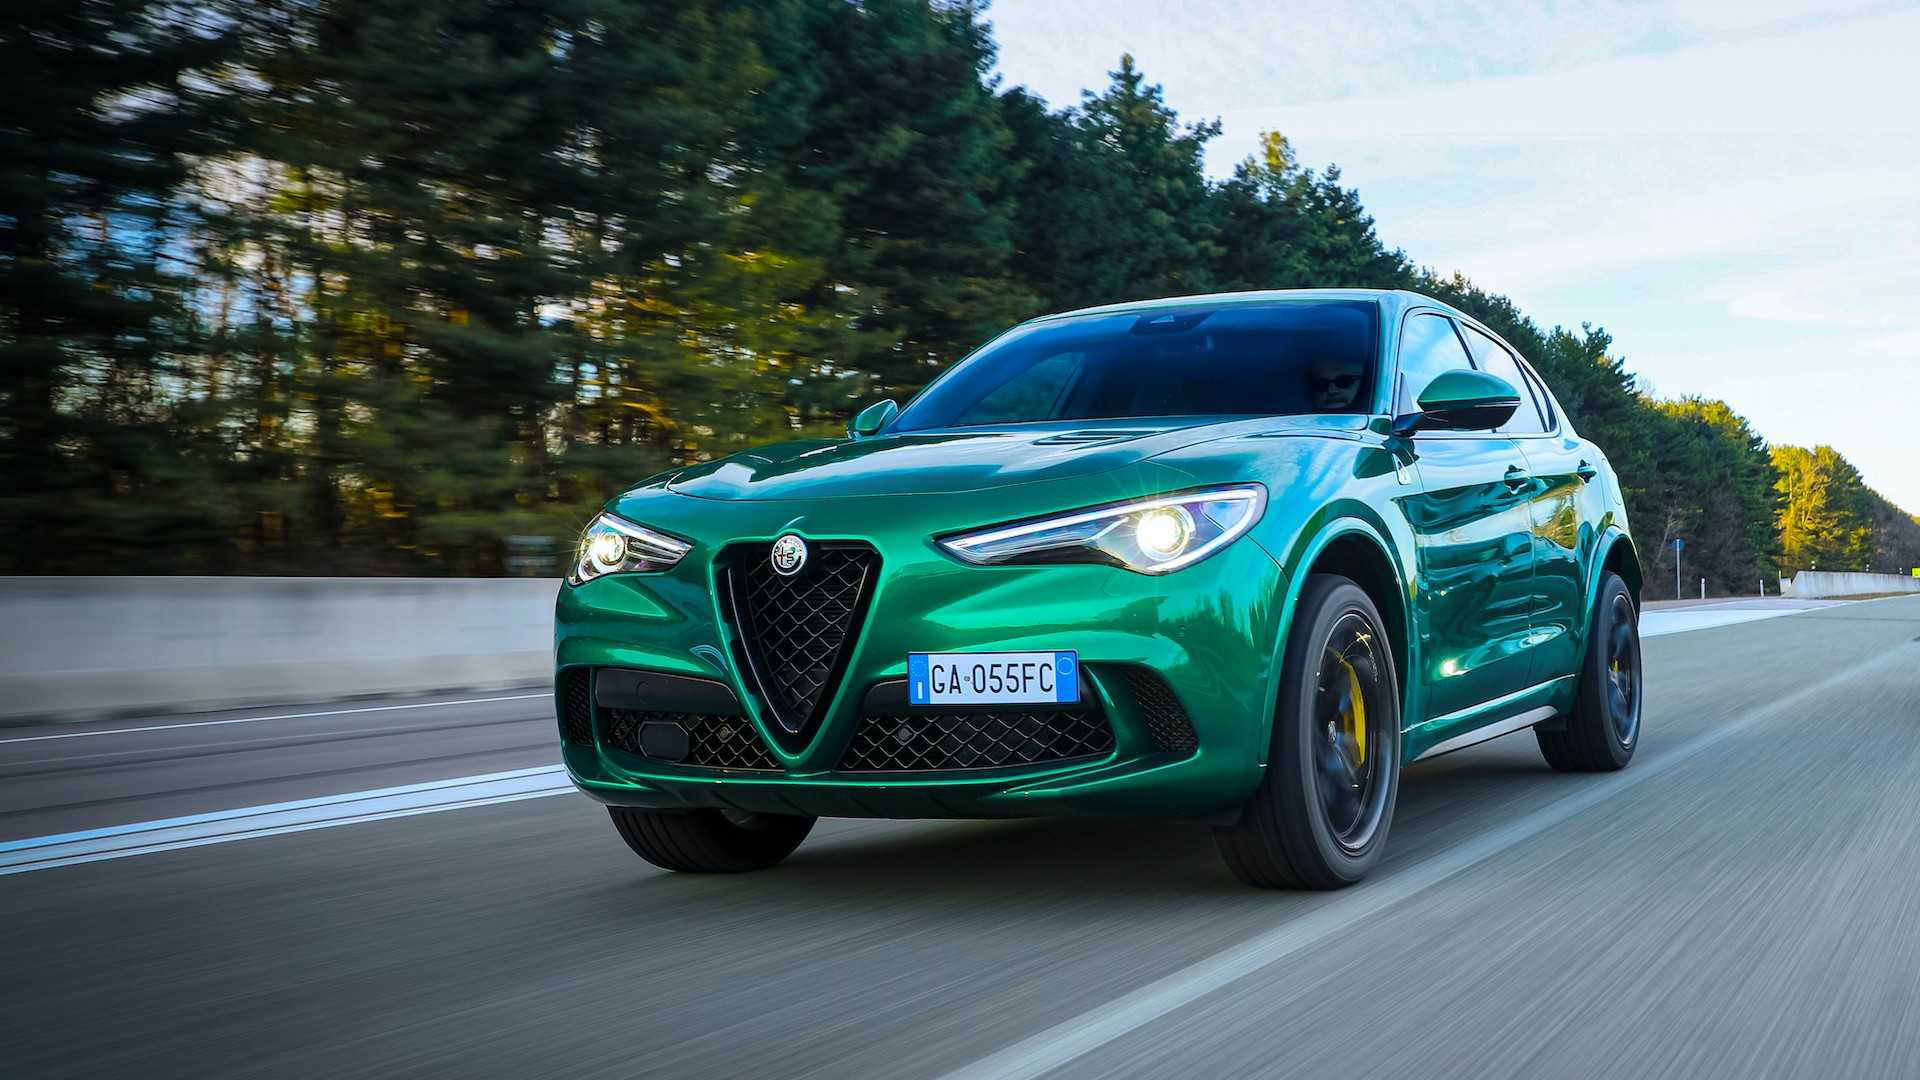 Alfa Romeo Stelvio, Giulia Quadrifoglio Updated In Europe